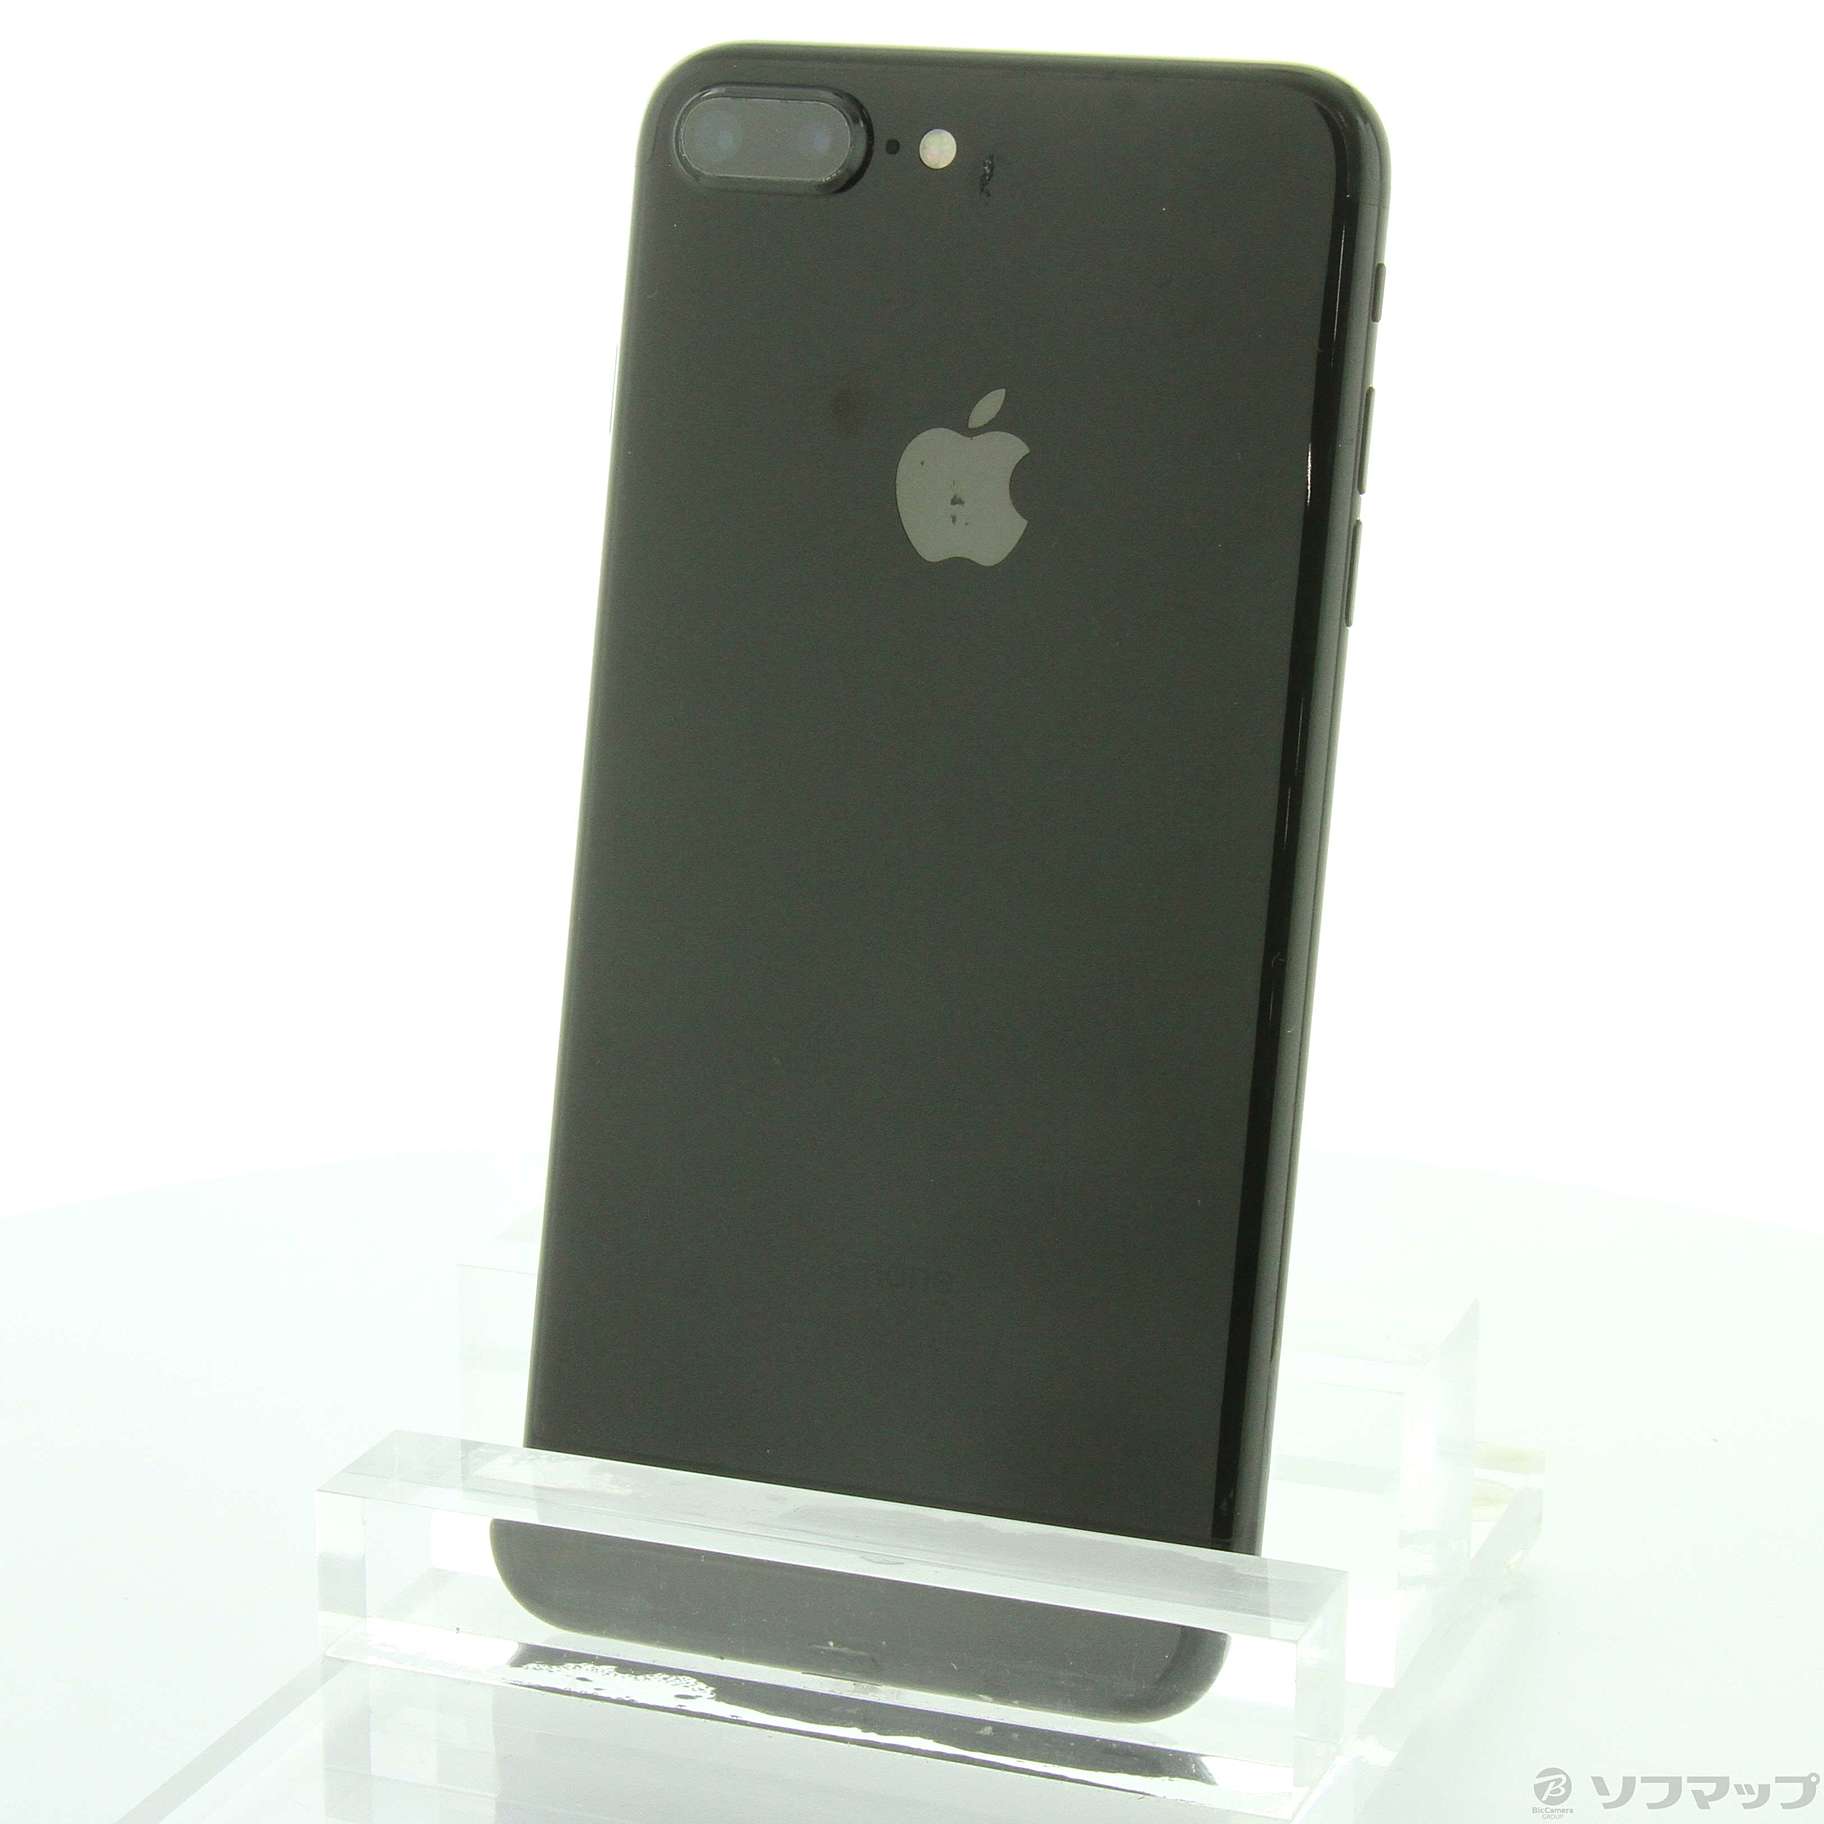 iPhone 7 Plus Jet Black 128 GB Softbank - スマートフォン本体